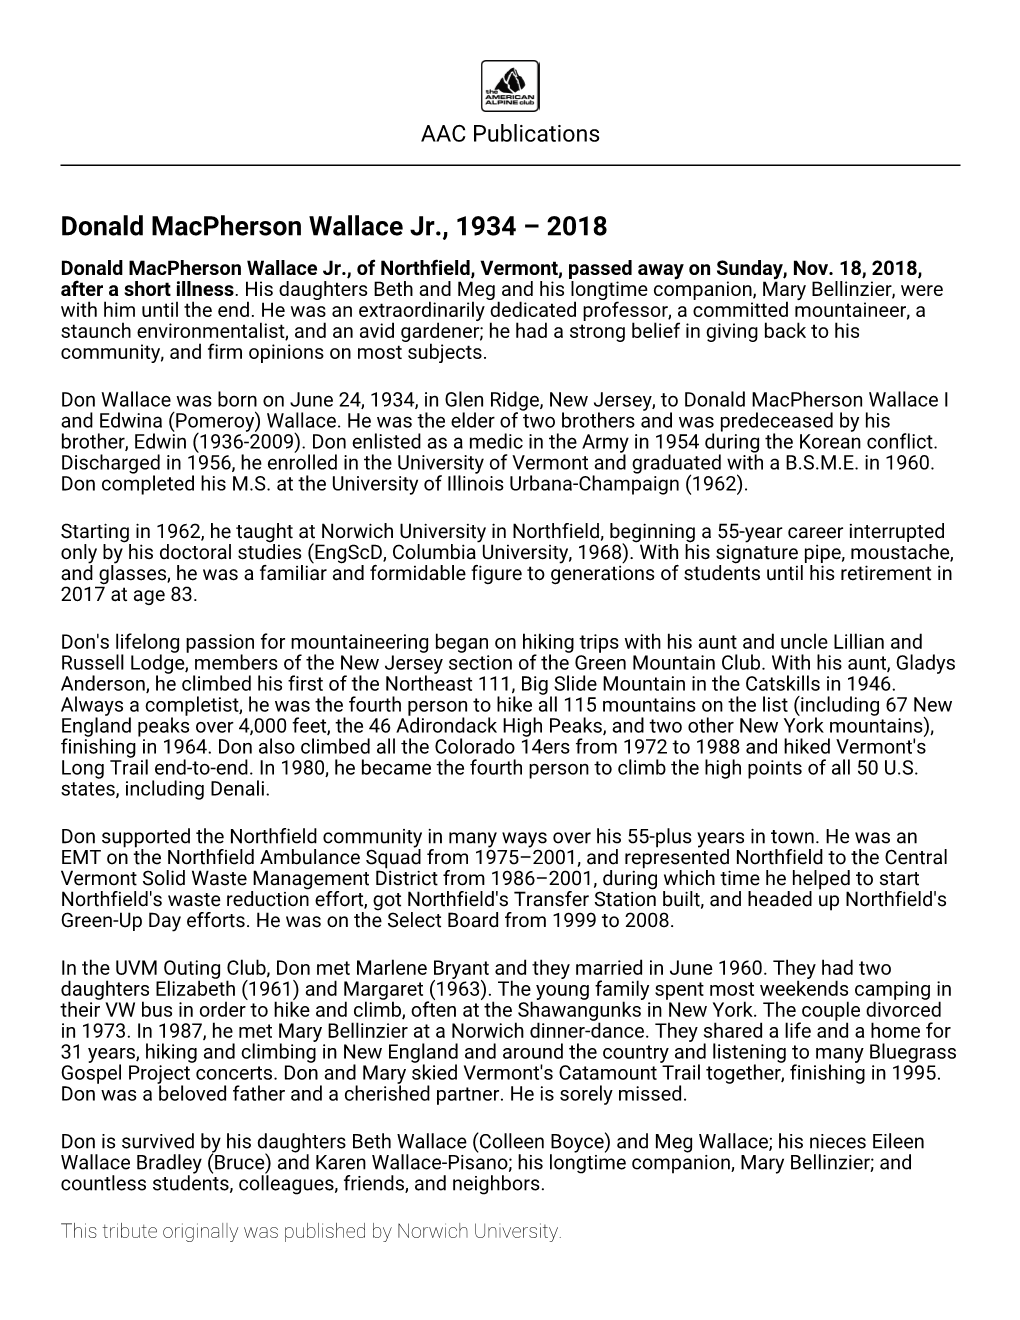 Donald Macpherson Wallace Jr., 1934 – 2018 Donald Macpherson Wallace Jr., of Northfield, Vermont, Passed Away on Sunday, Nov